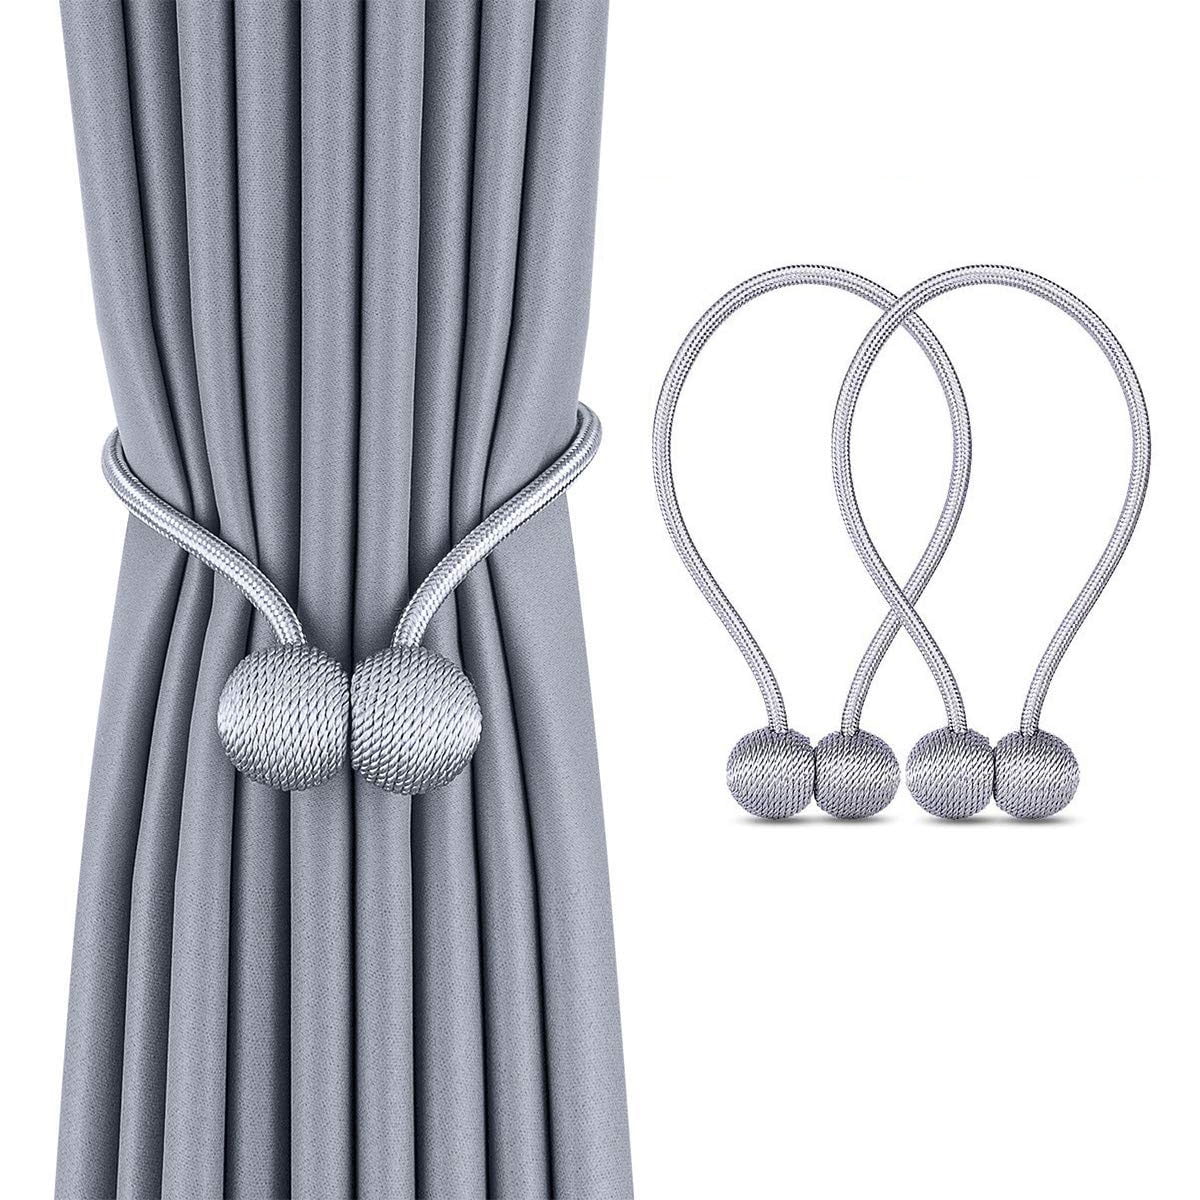 Curtain Tie Backs Tassels Gray & White-Gold Long Tassels 13 Inch Rope Tie Back 